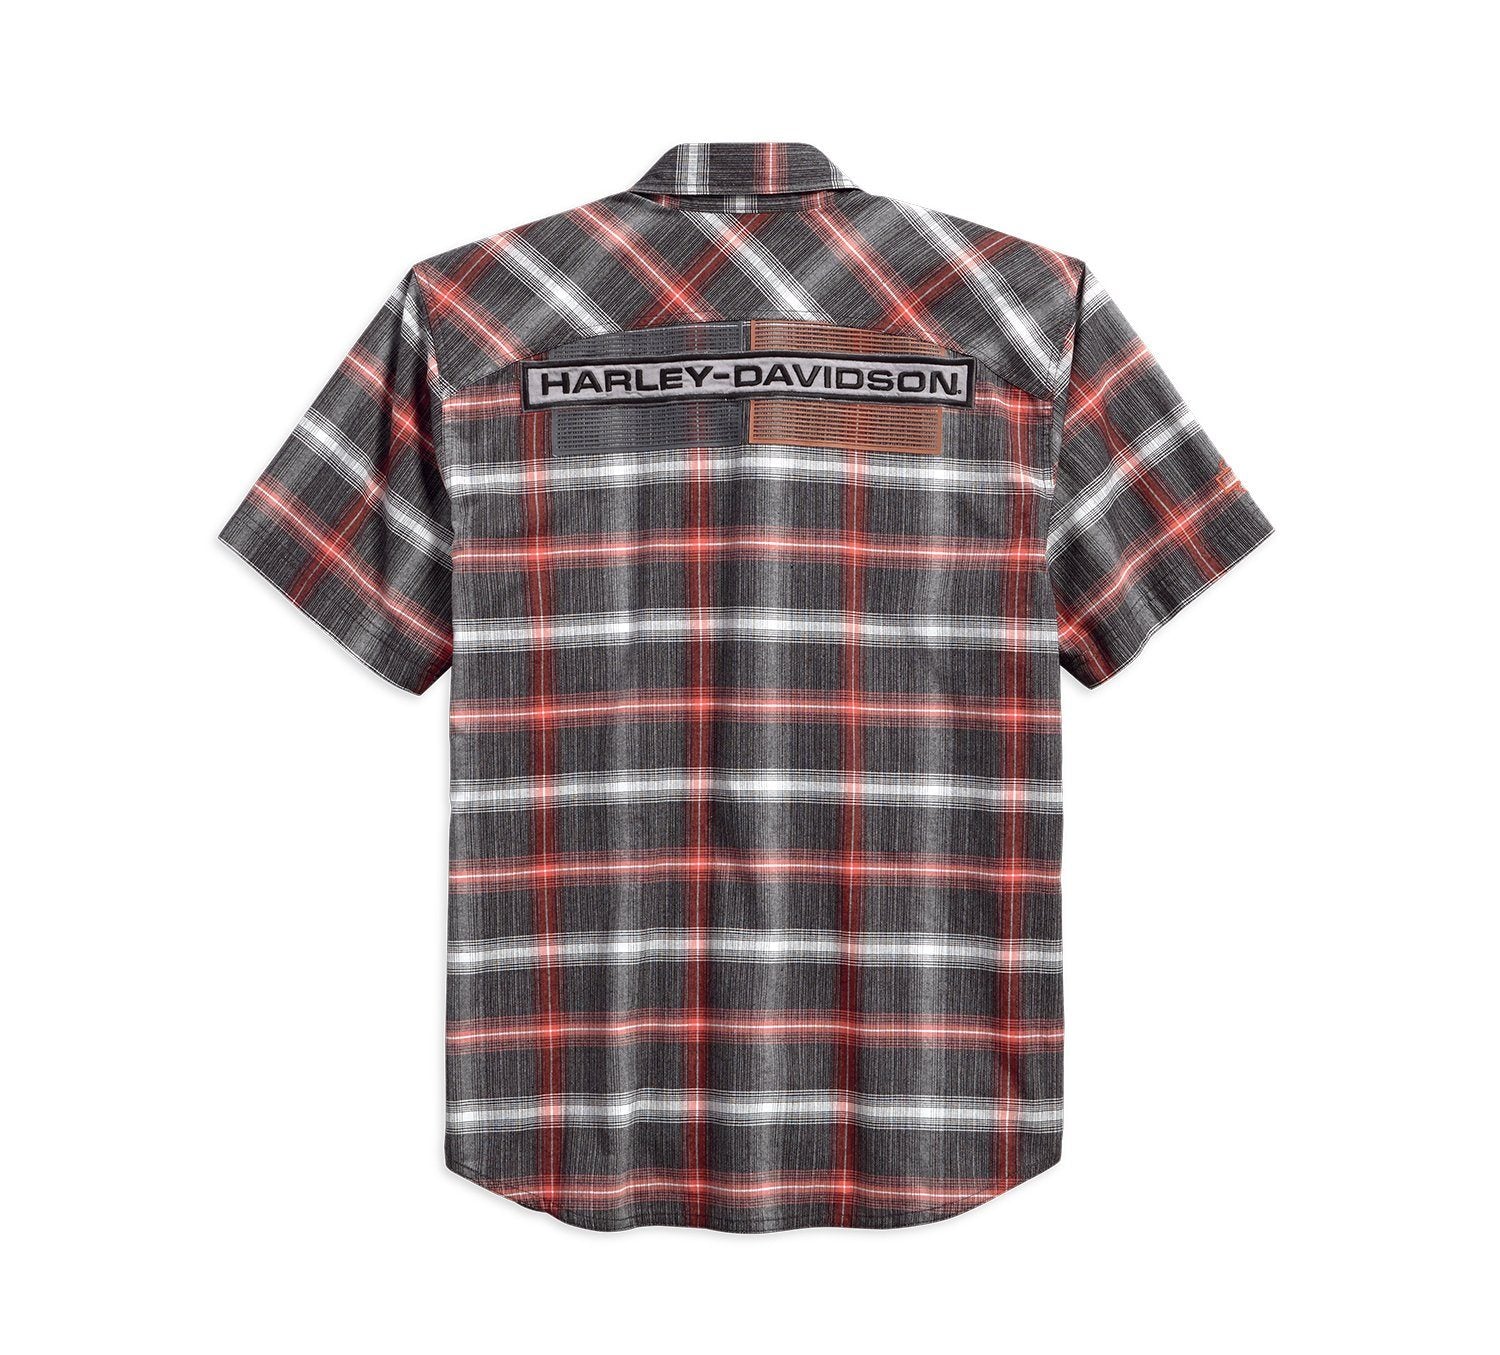 Harley-Davidson Mens High Density Graphic Plaid Woven Shirt 96121-18VM